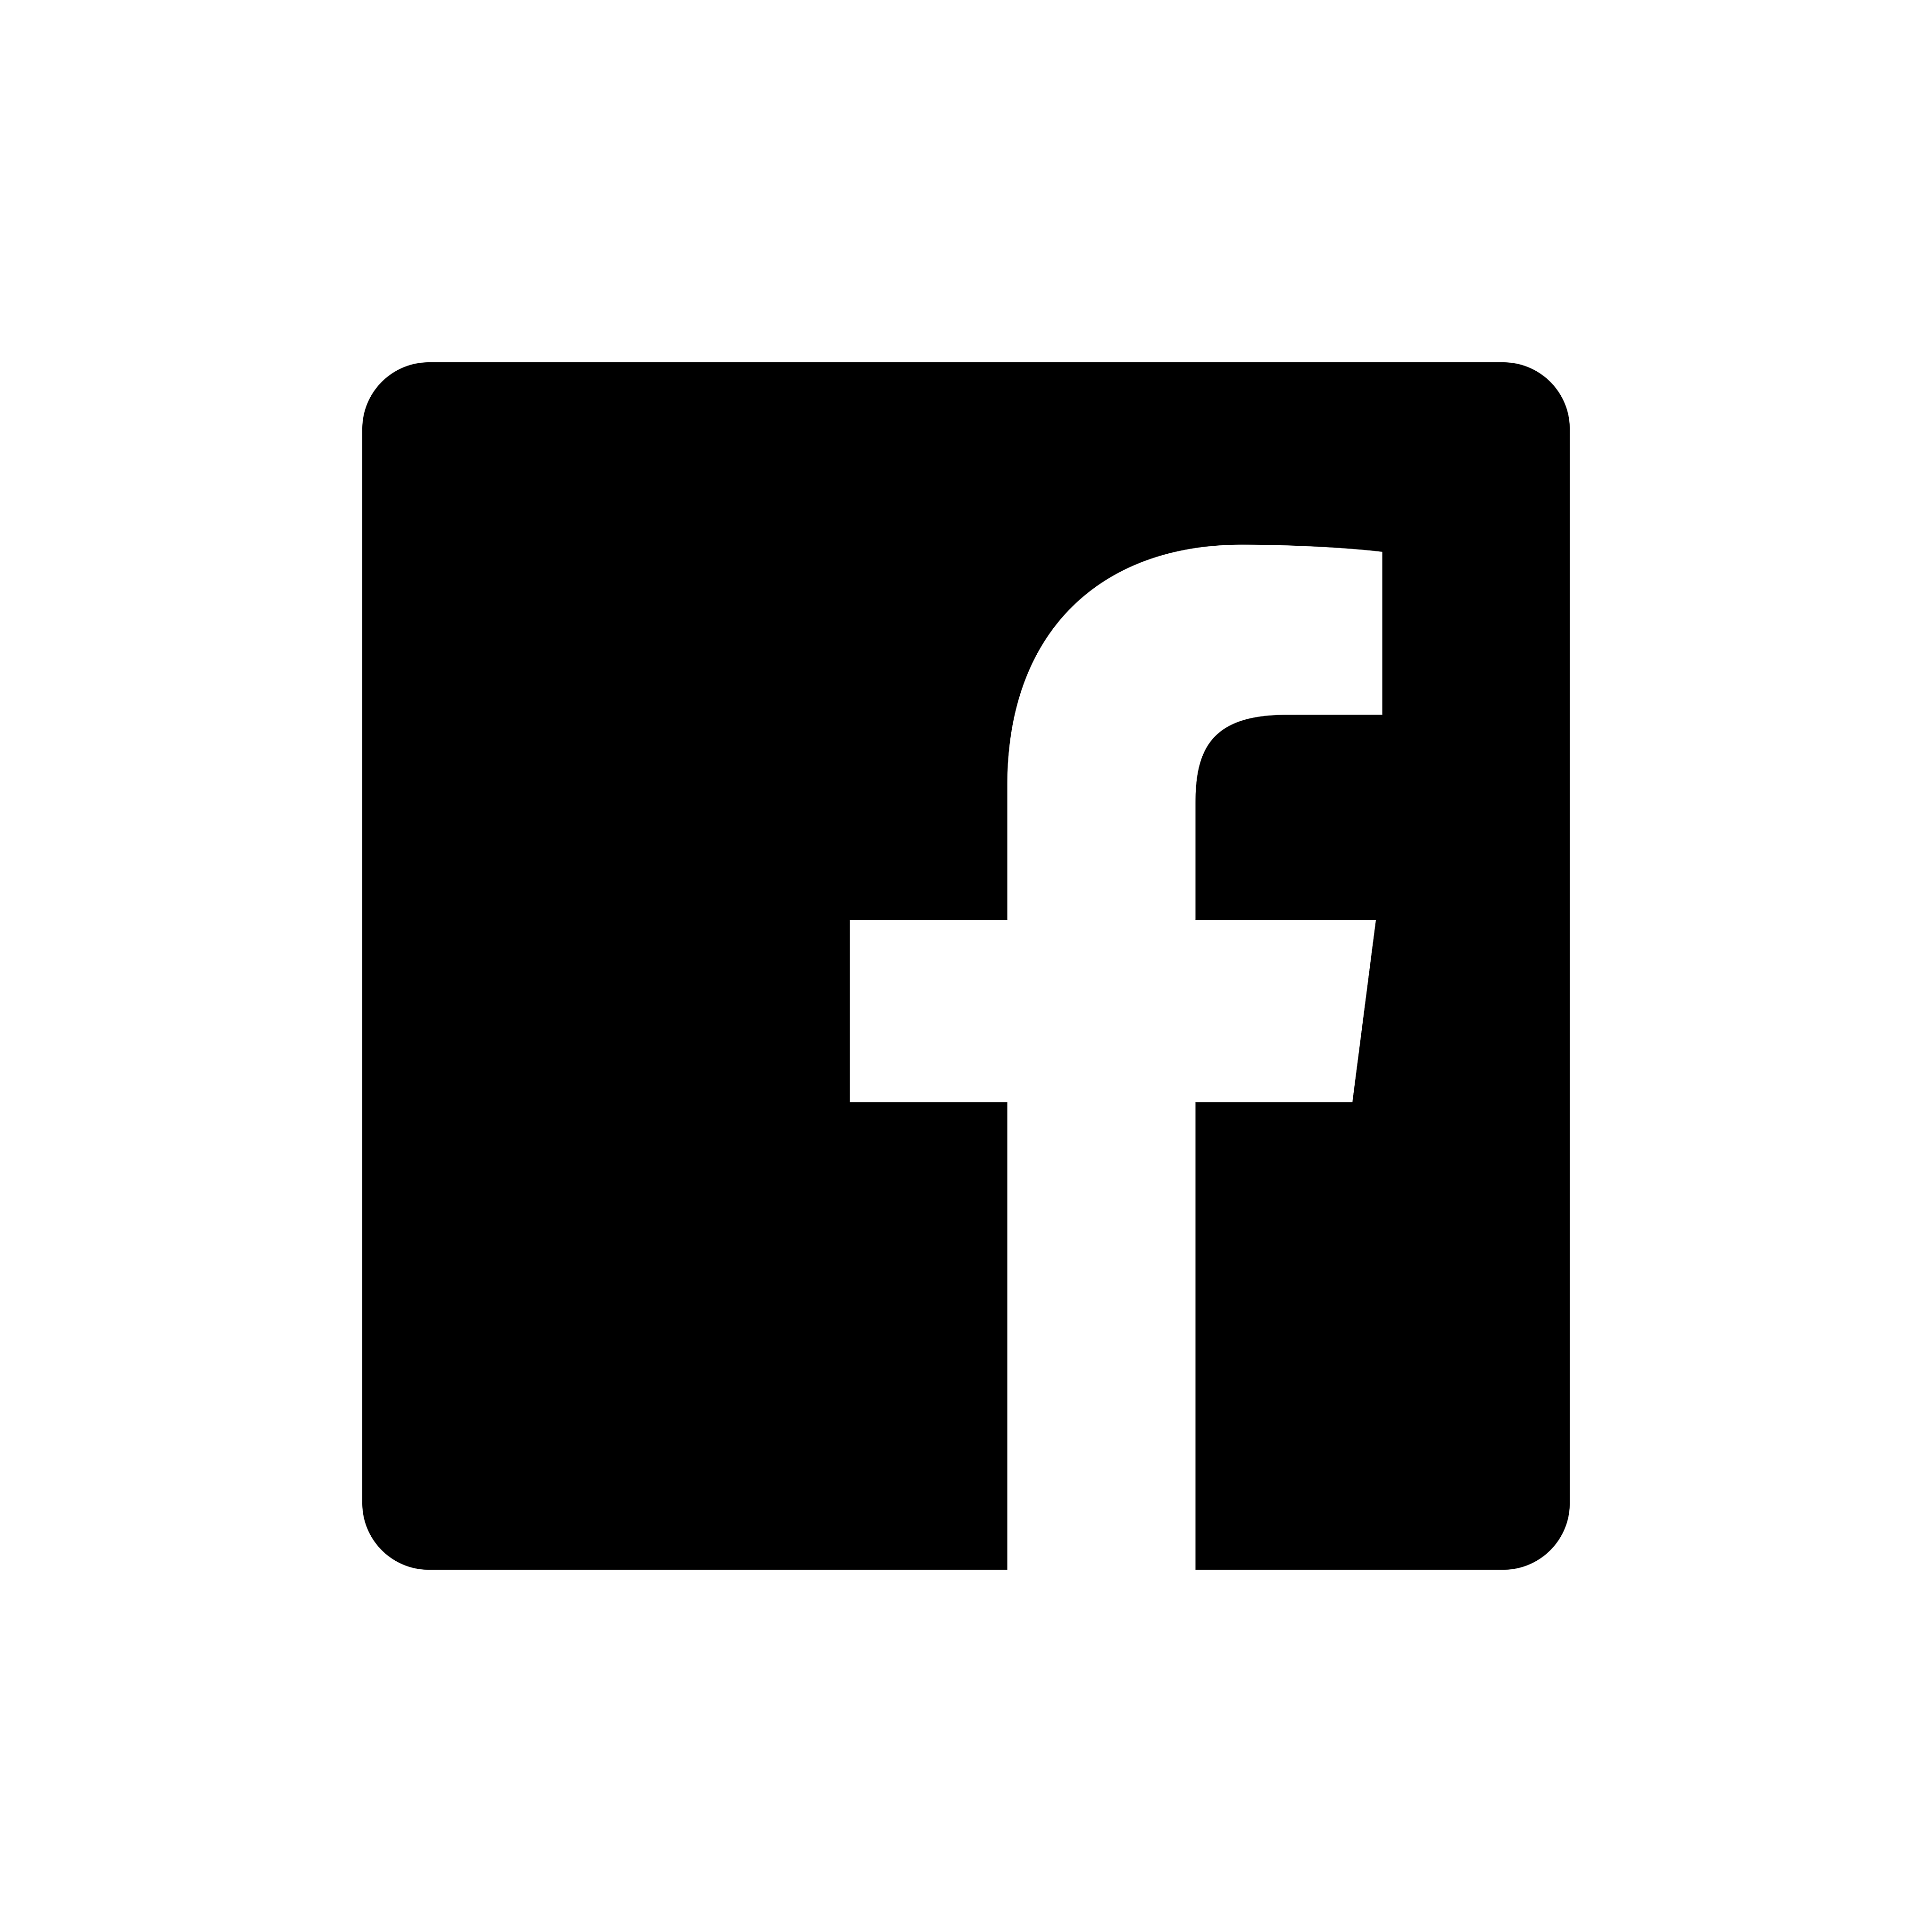 Black and White Facebook Logo Icon